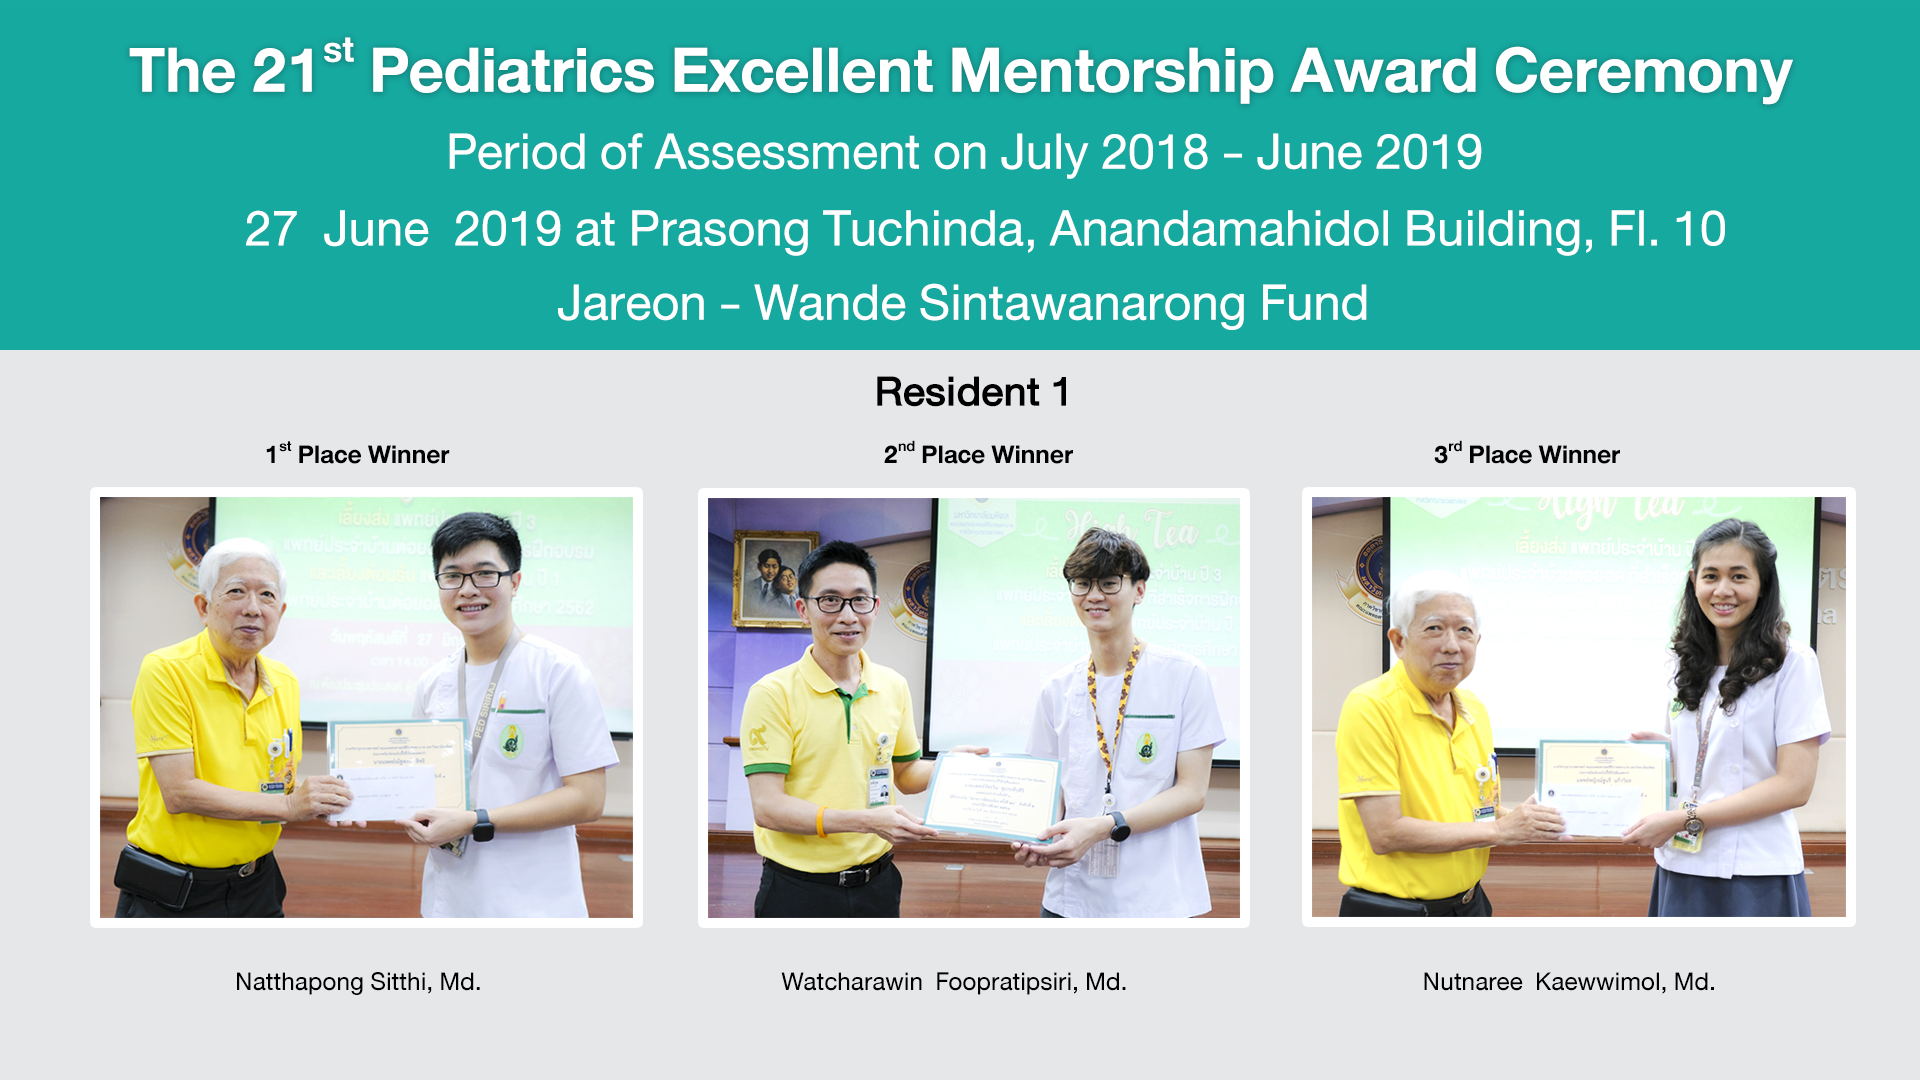 The 21st Pediatrics Excellent Mentorship Award Ceremony